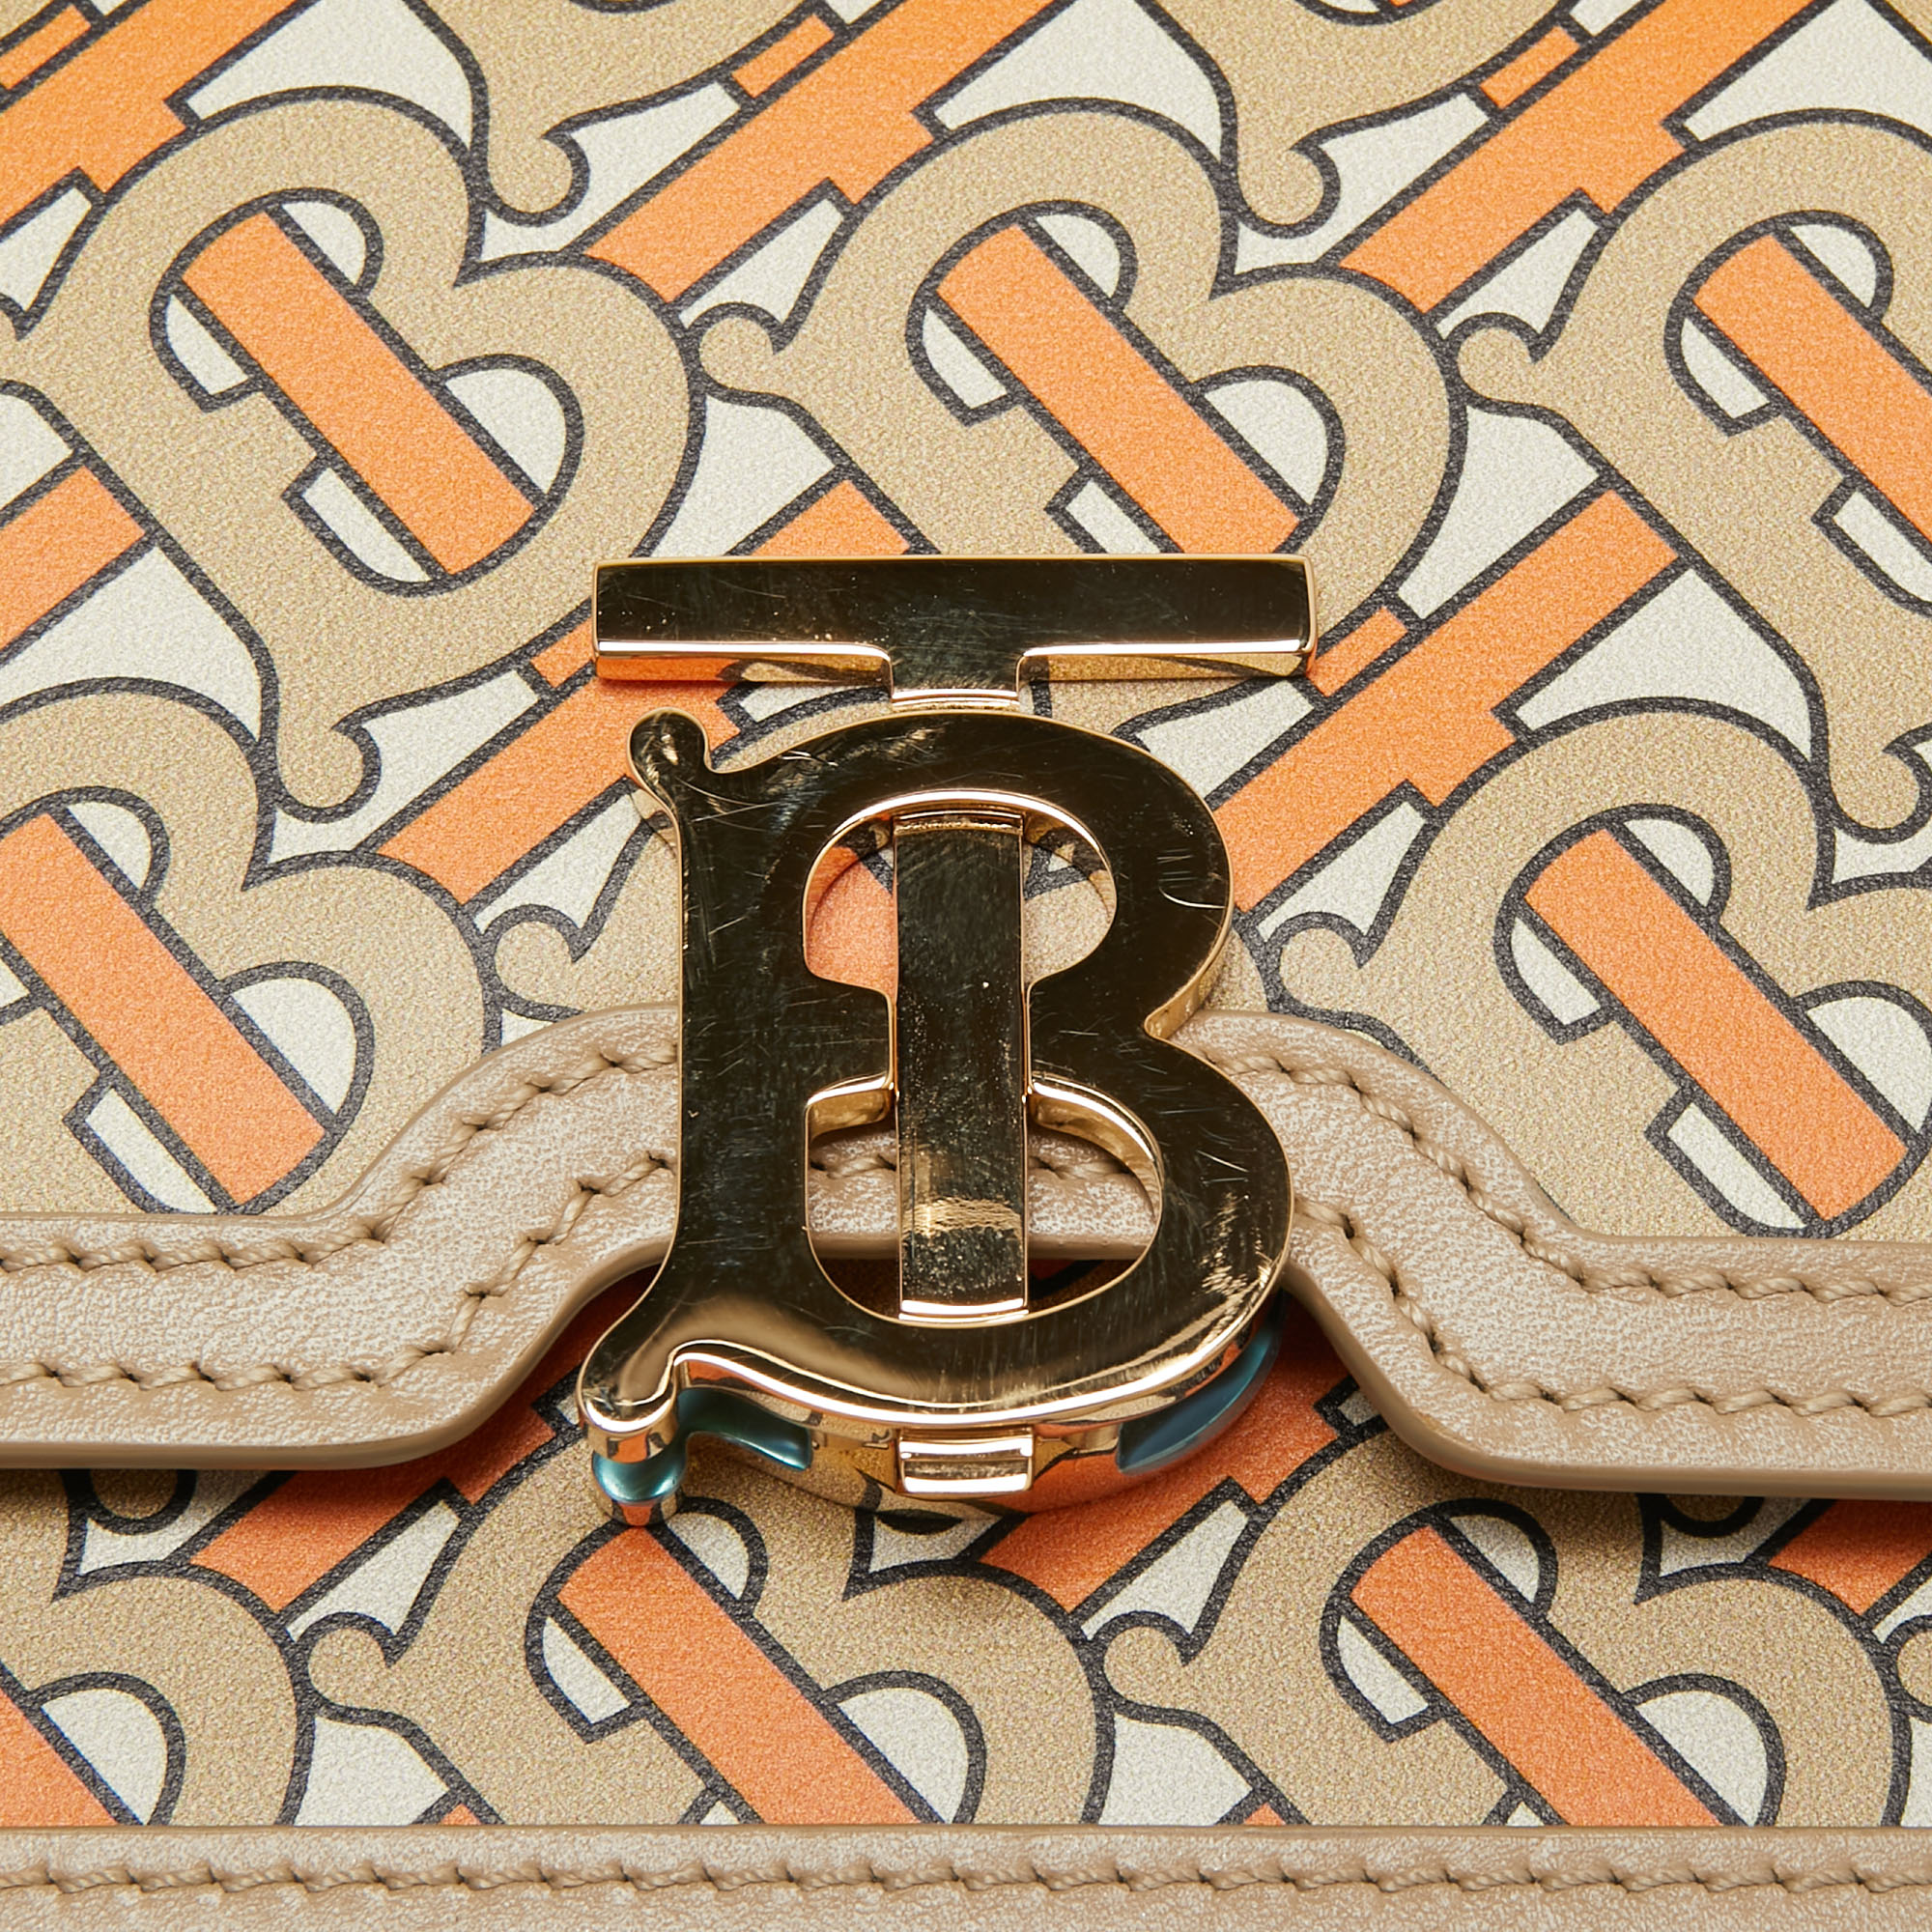 Burberry Multicolor TB Monogram Leather Mini Belt Bag Burberry